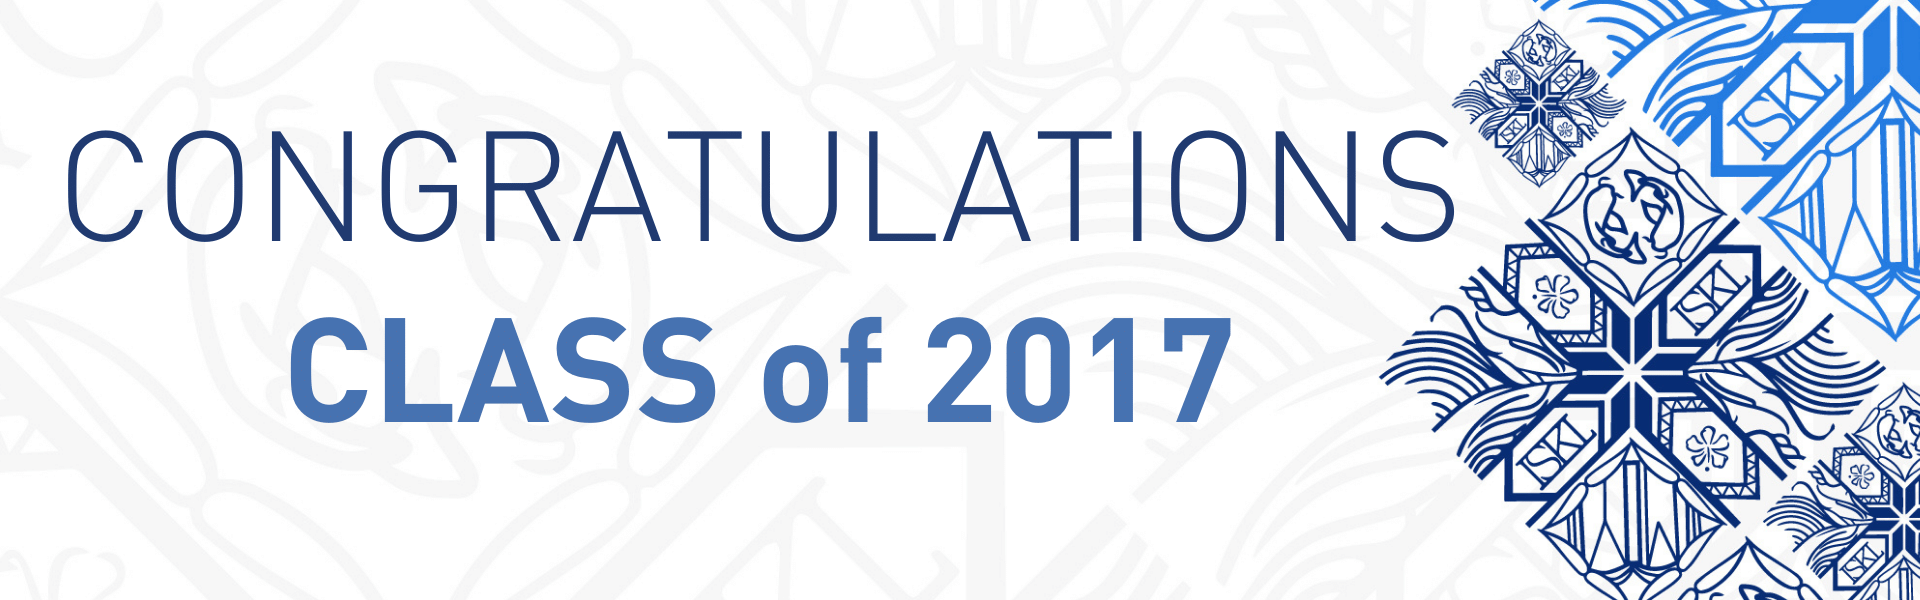 Congratulations - Class of 2017